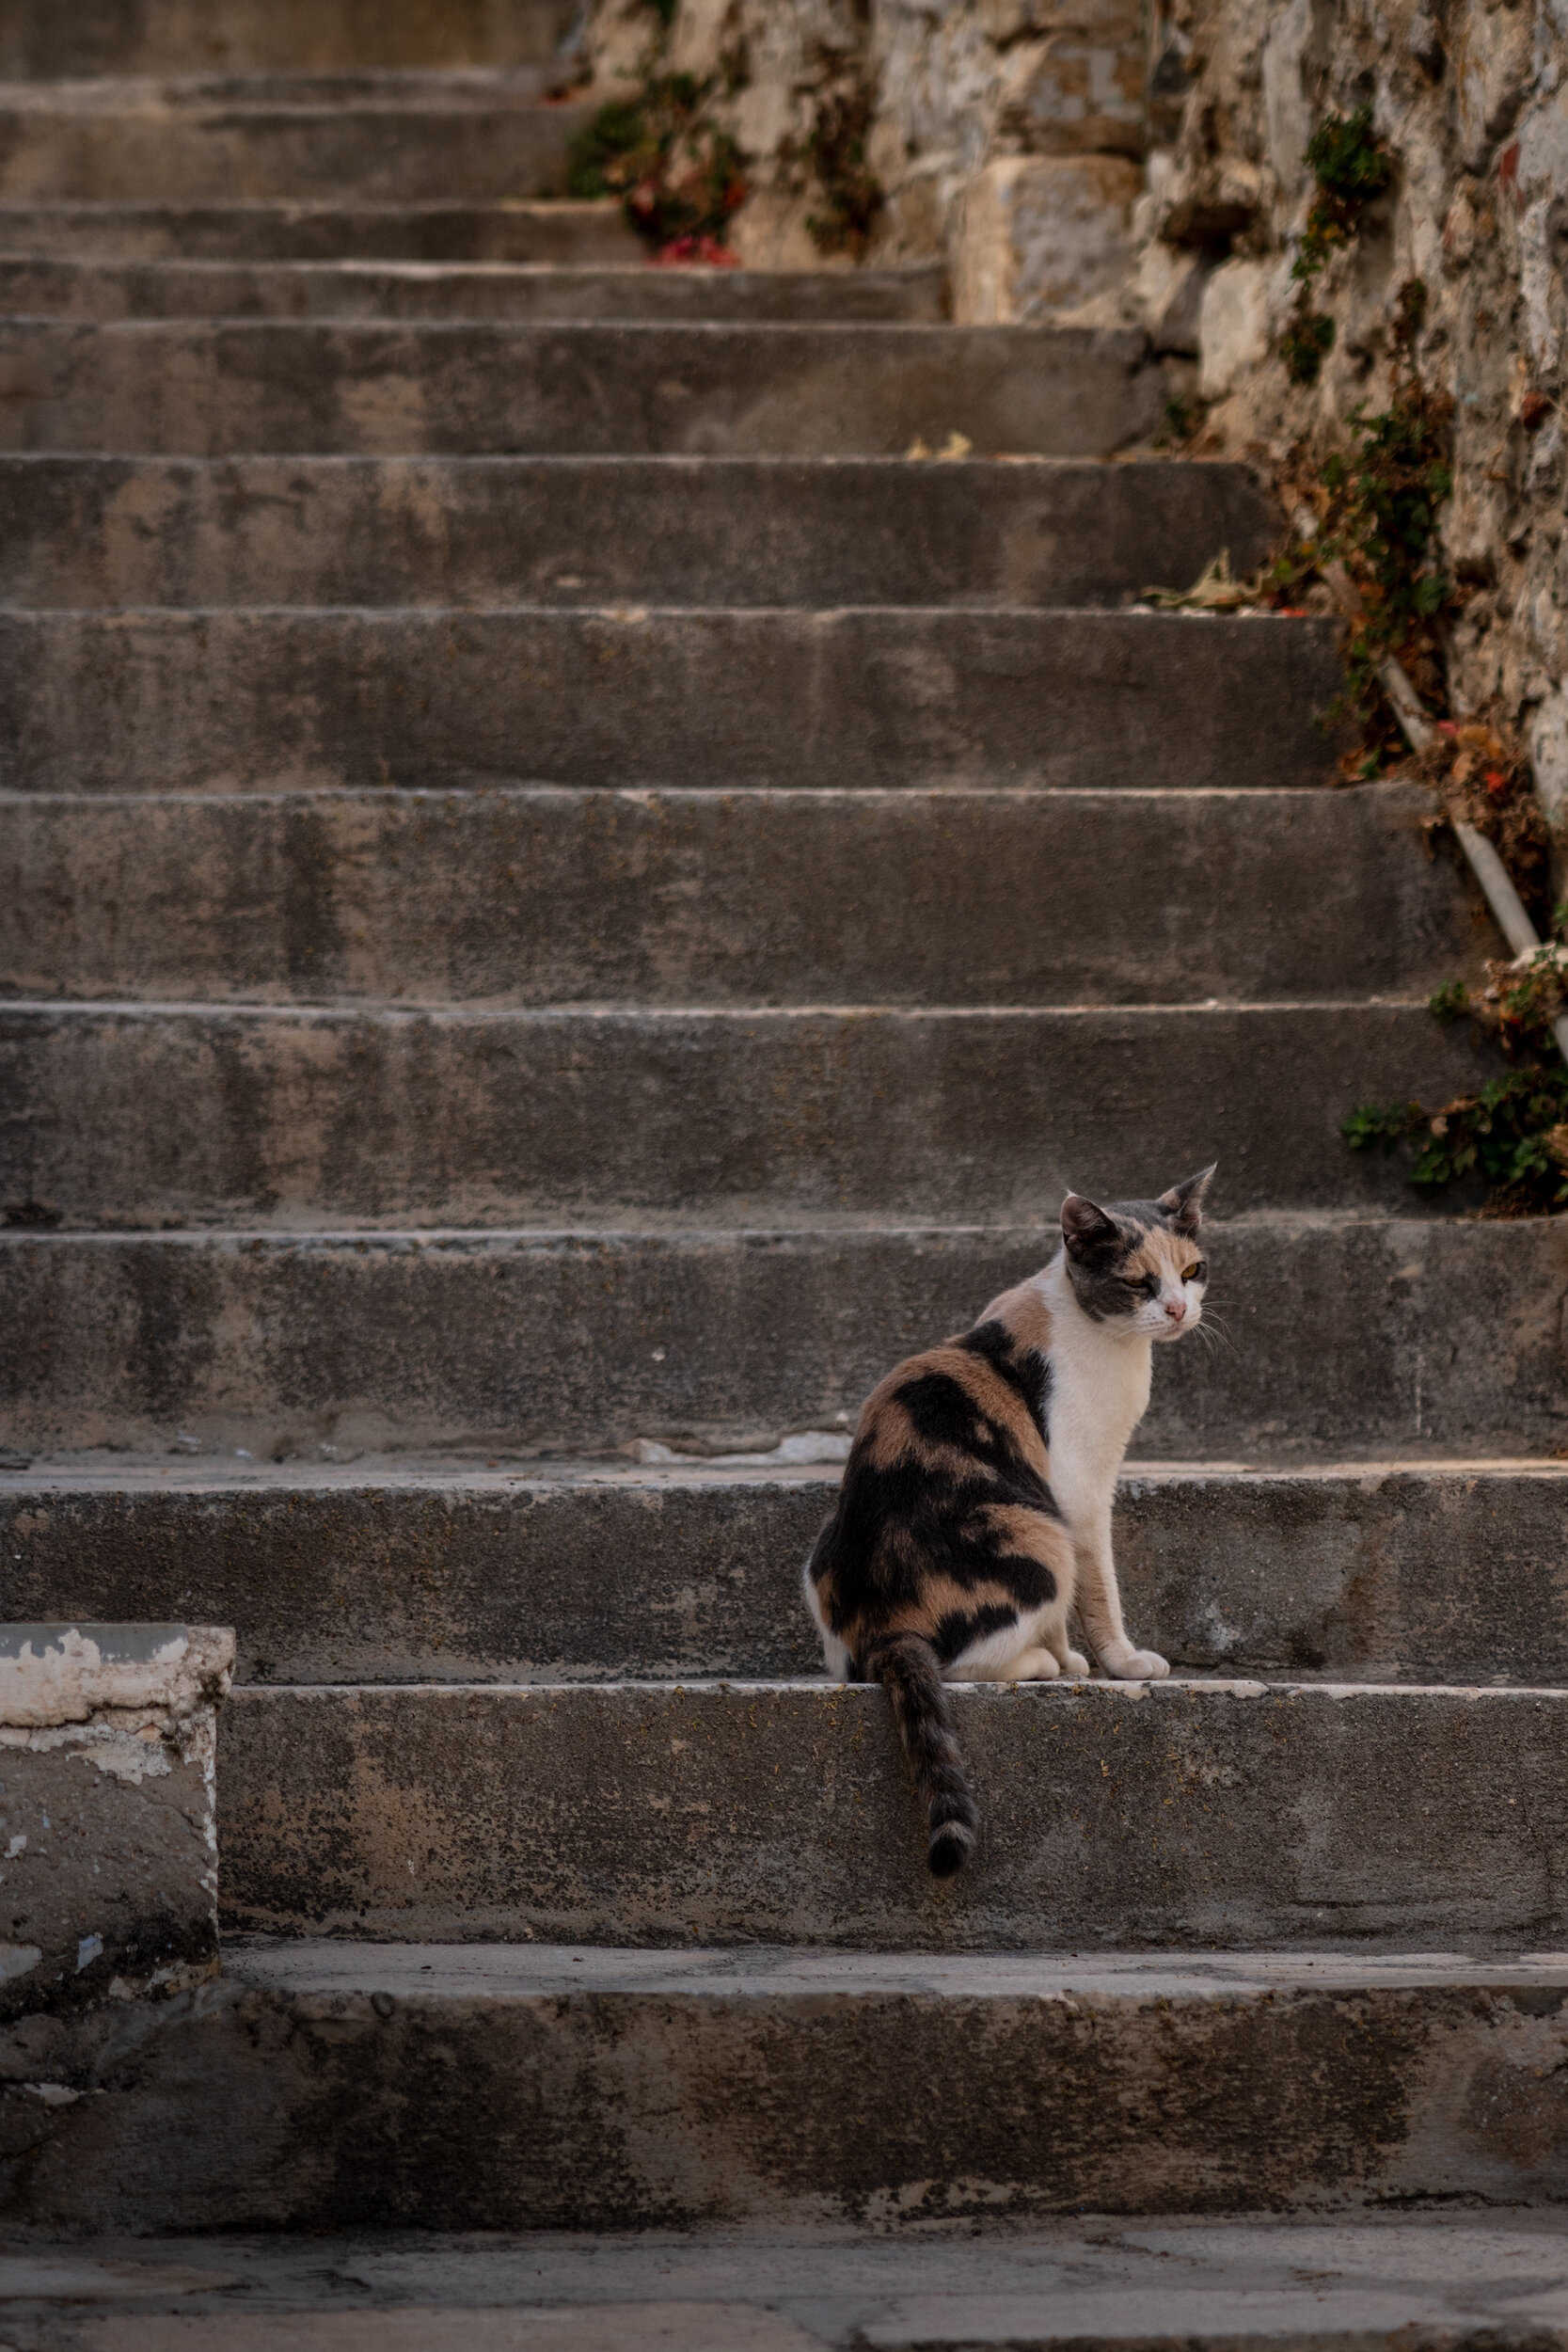 Cats-Of-Syros-Vasilis-Moustakas-Travel-Photography (2).jpg